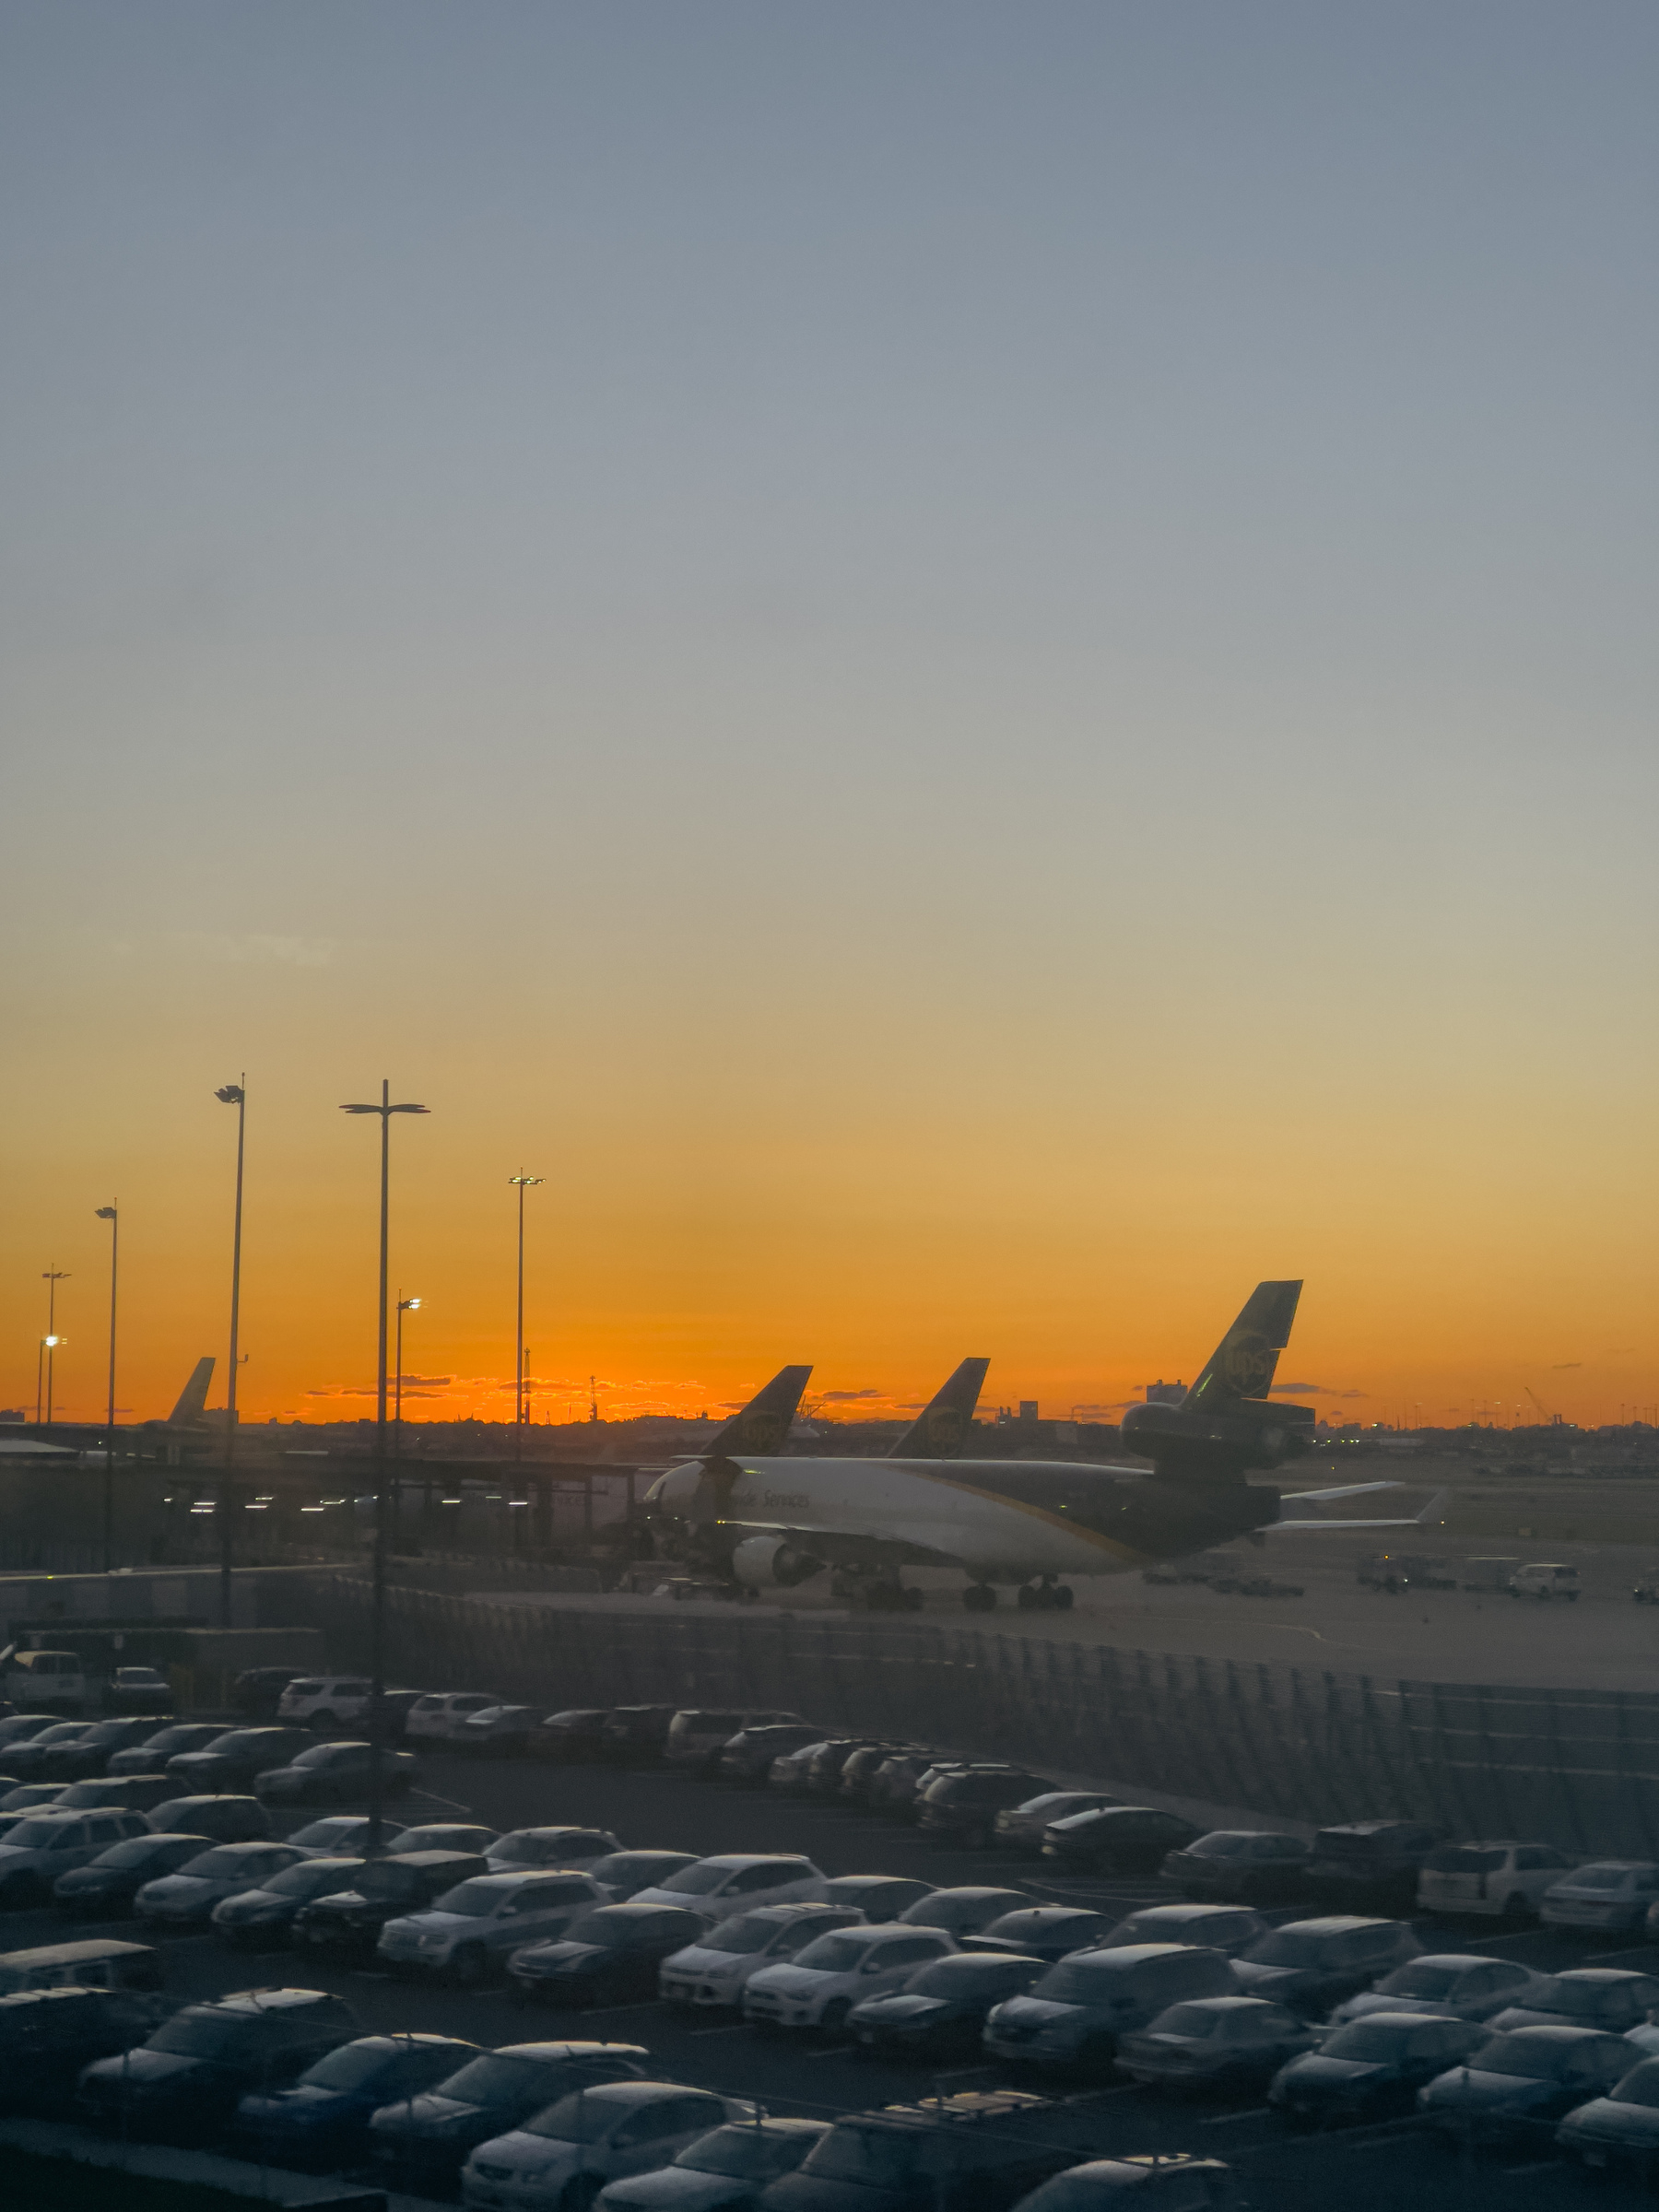 Cars and airplanes at dawn.